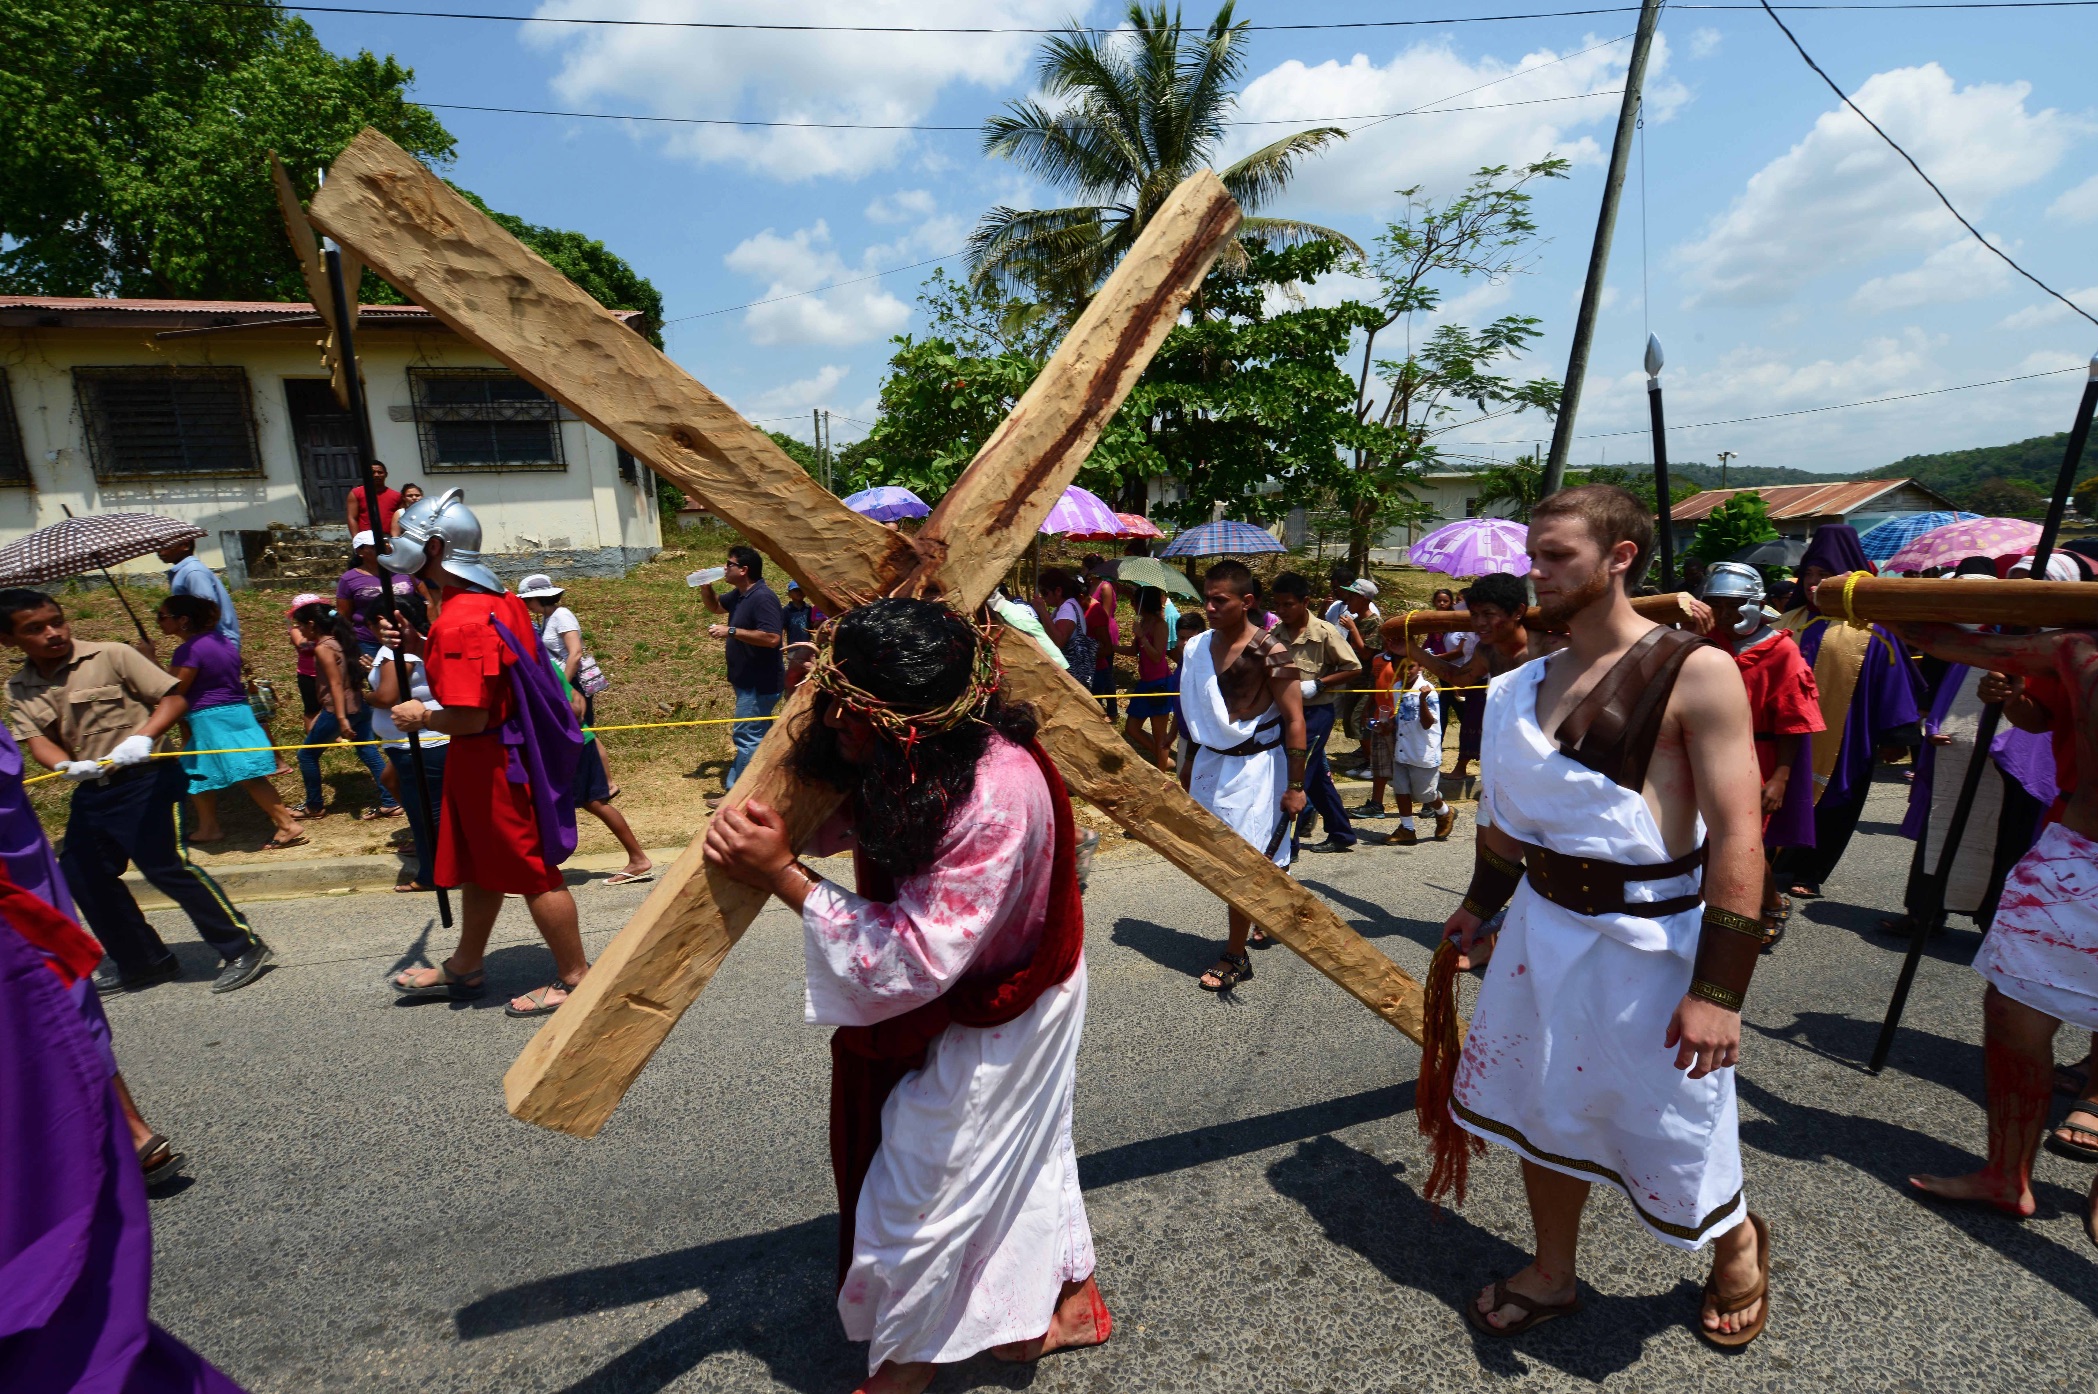 Celebrating Easter in Belize | The Holy & the Heartfelt | 2